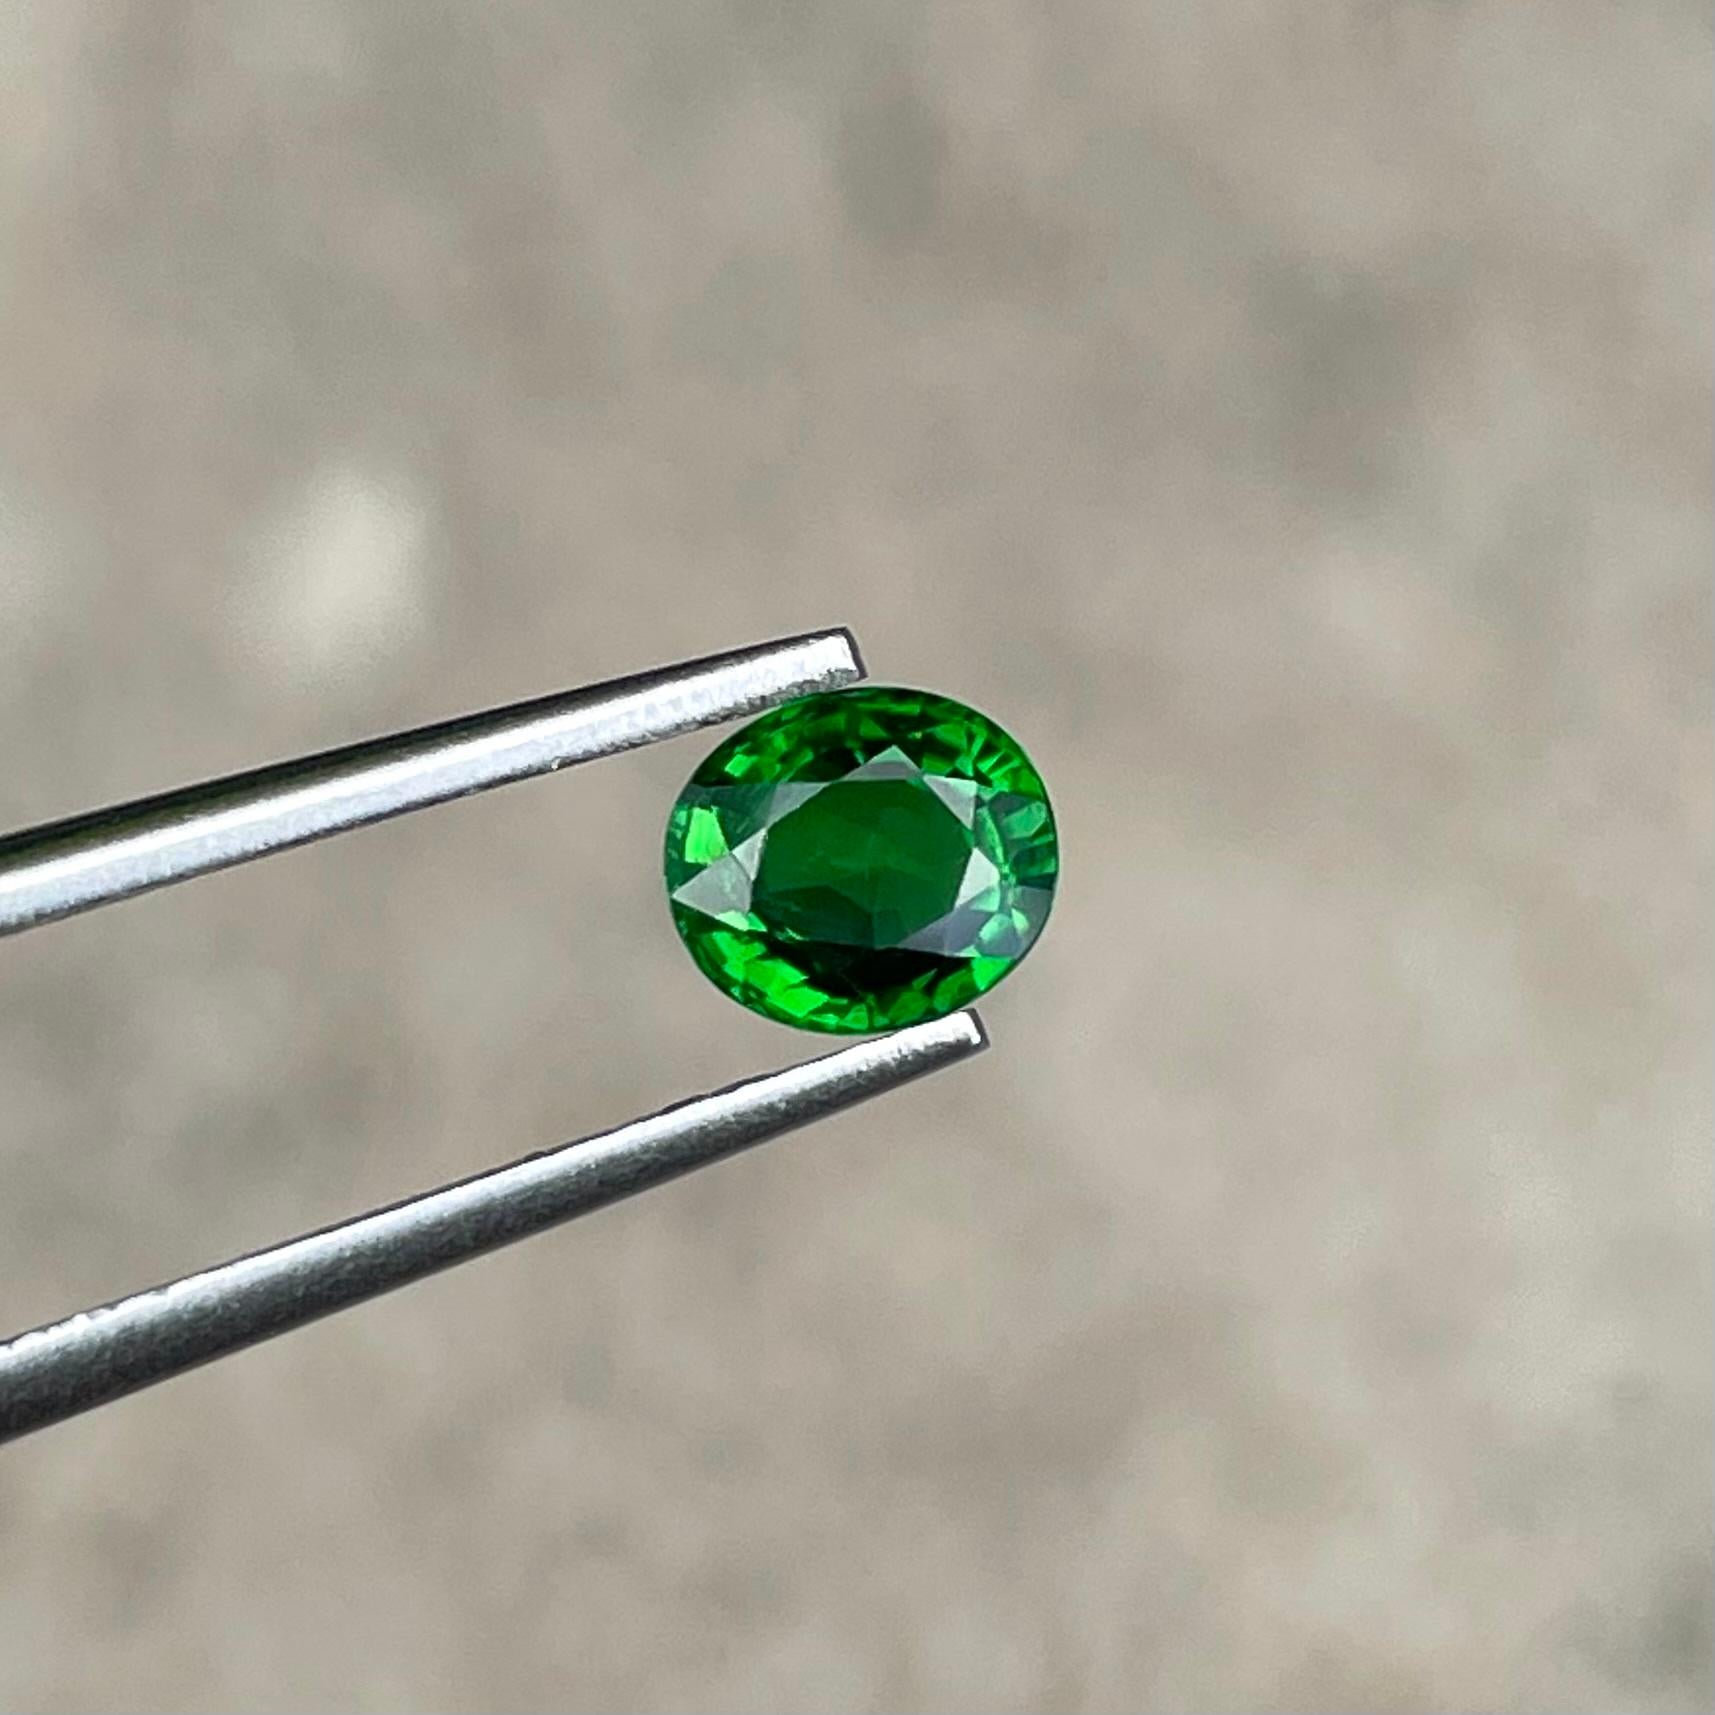 Modern Vivid Green tsavorite garnet 0.80 carats Oval Cut Natural Gemstone From Kenya For Sale